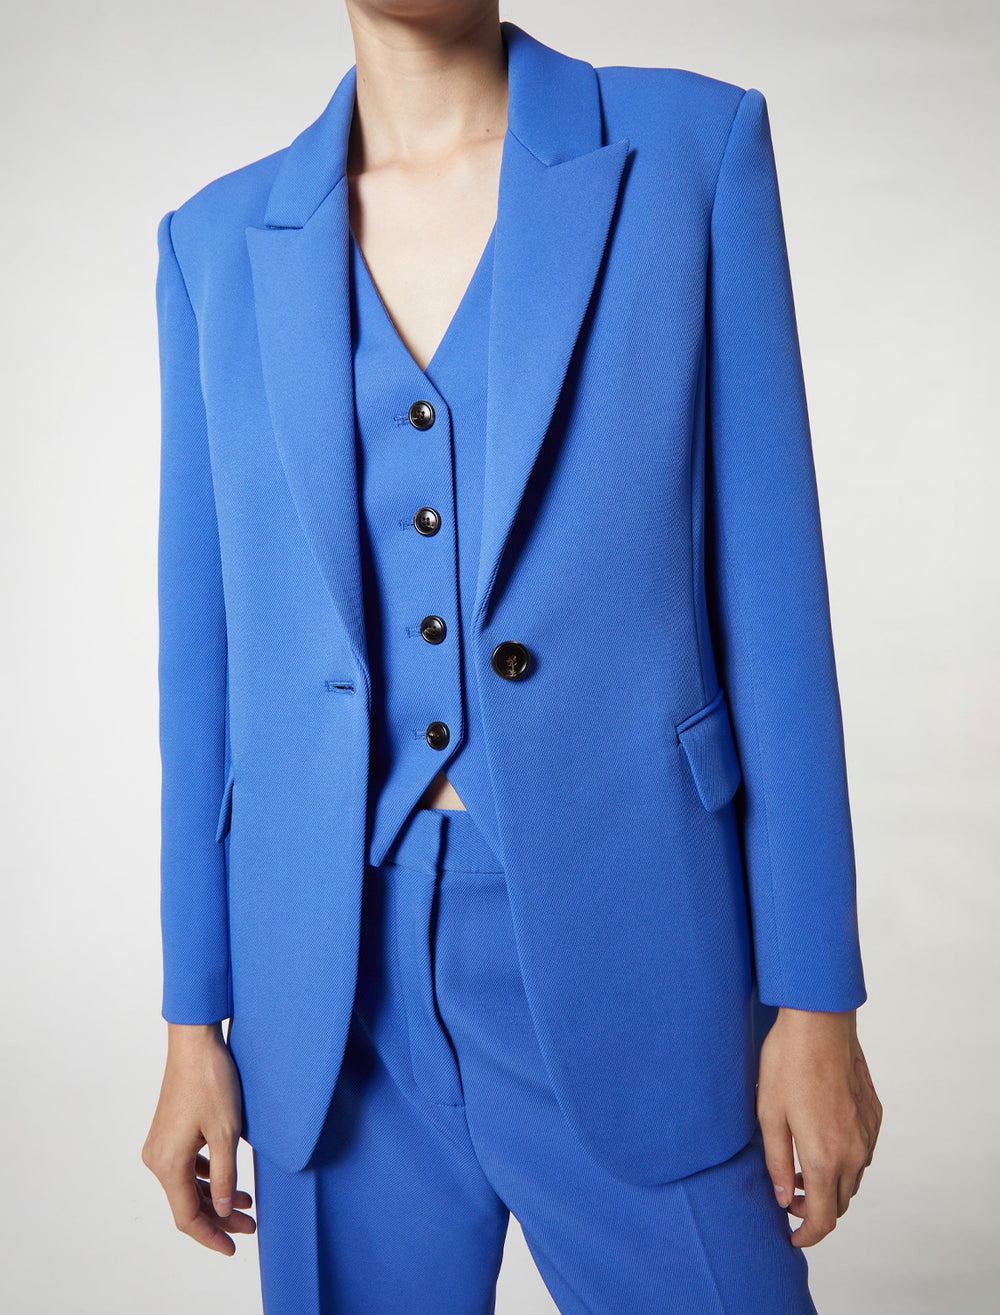 Model wearing Saint Art's gia blazer in french blue.